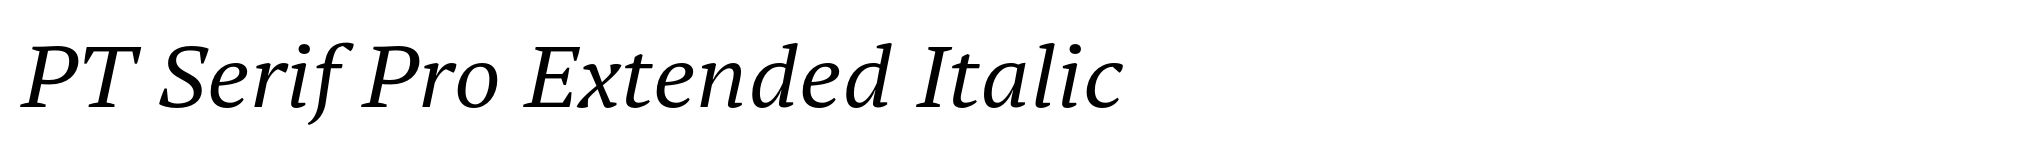 PT Serif Pro Extended Italic image